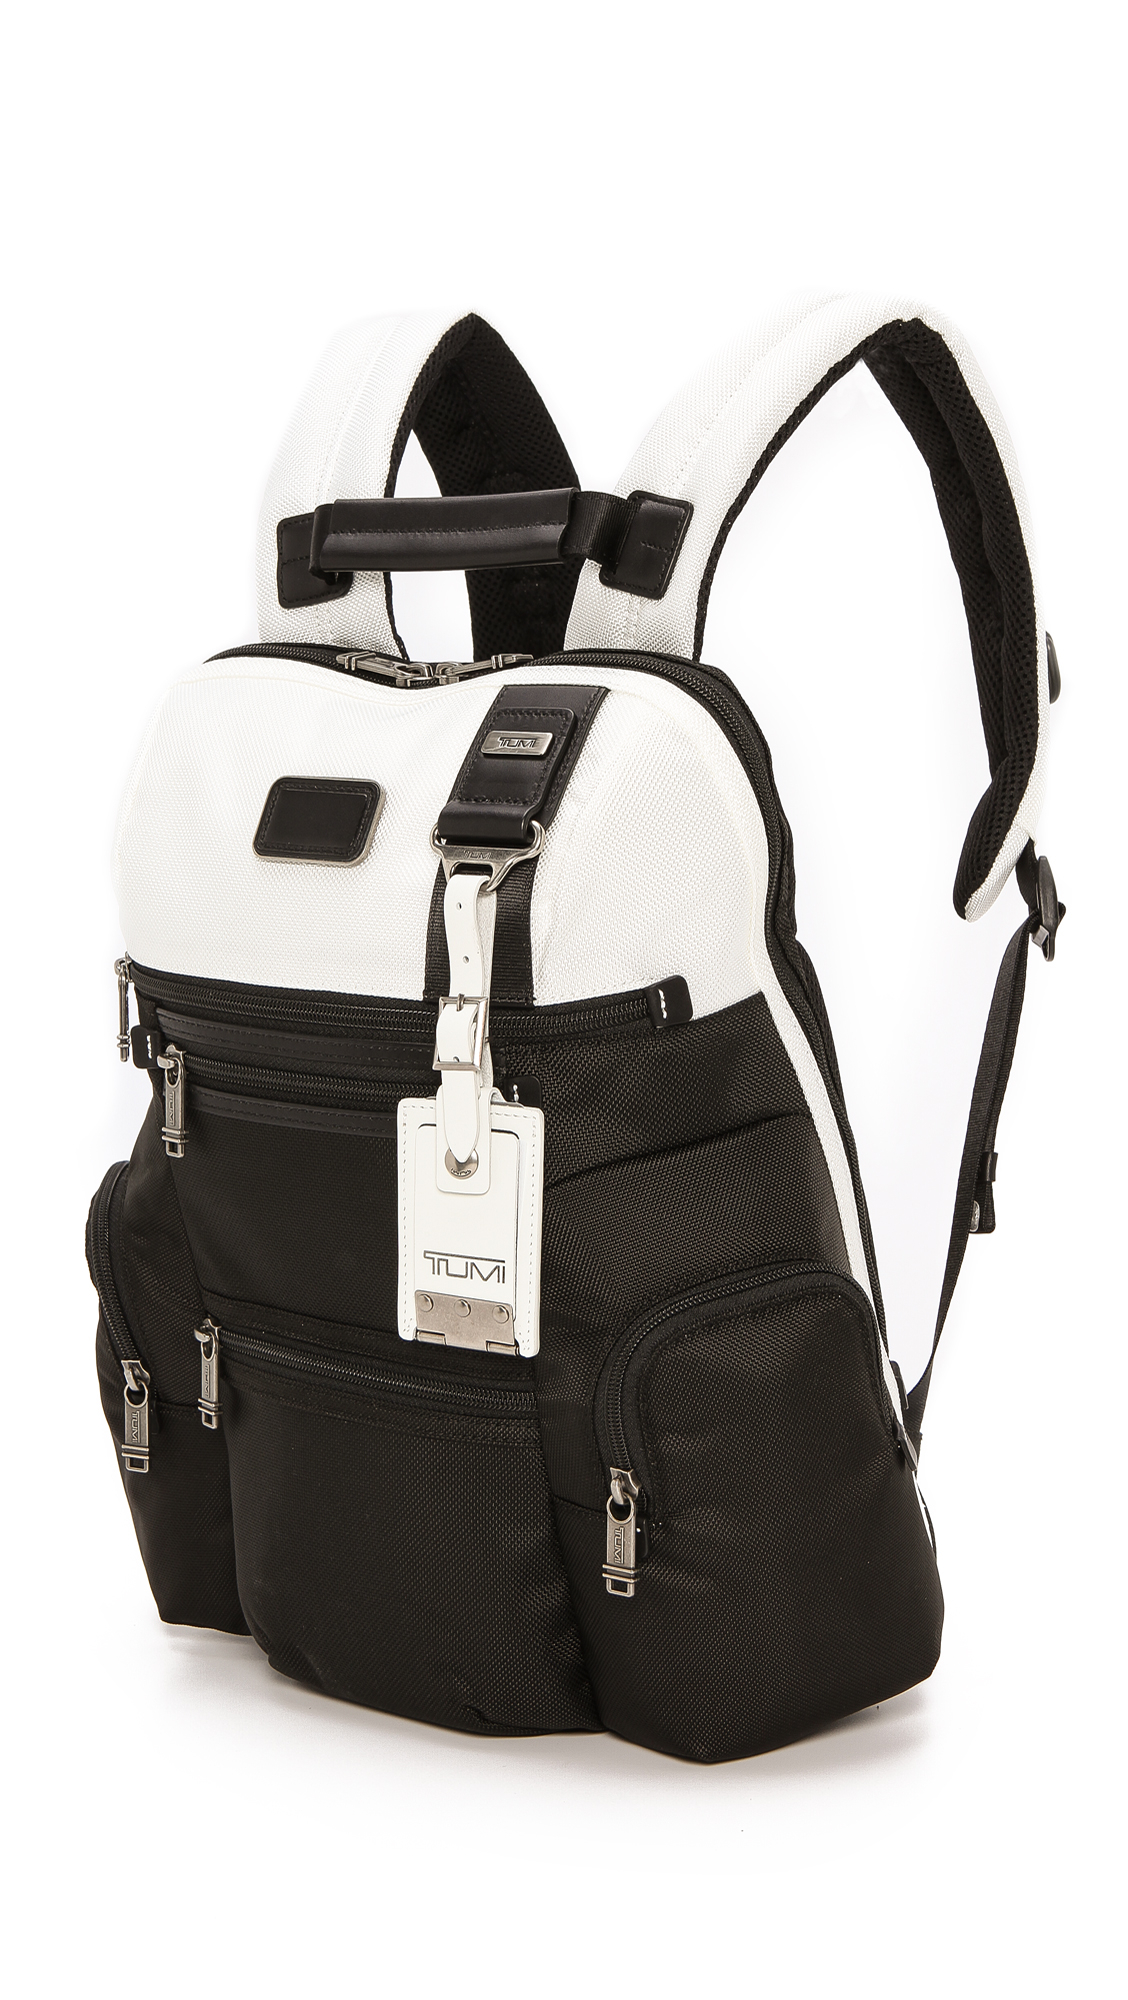 Tumi Alpha Bravo Knox Backpack in Black for Men - Lyst